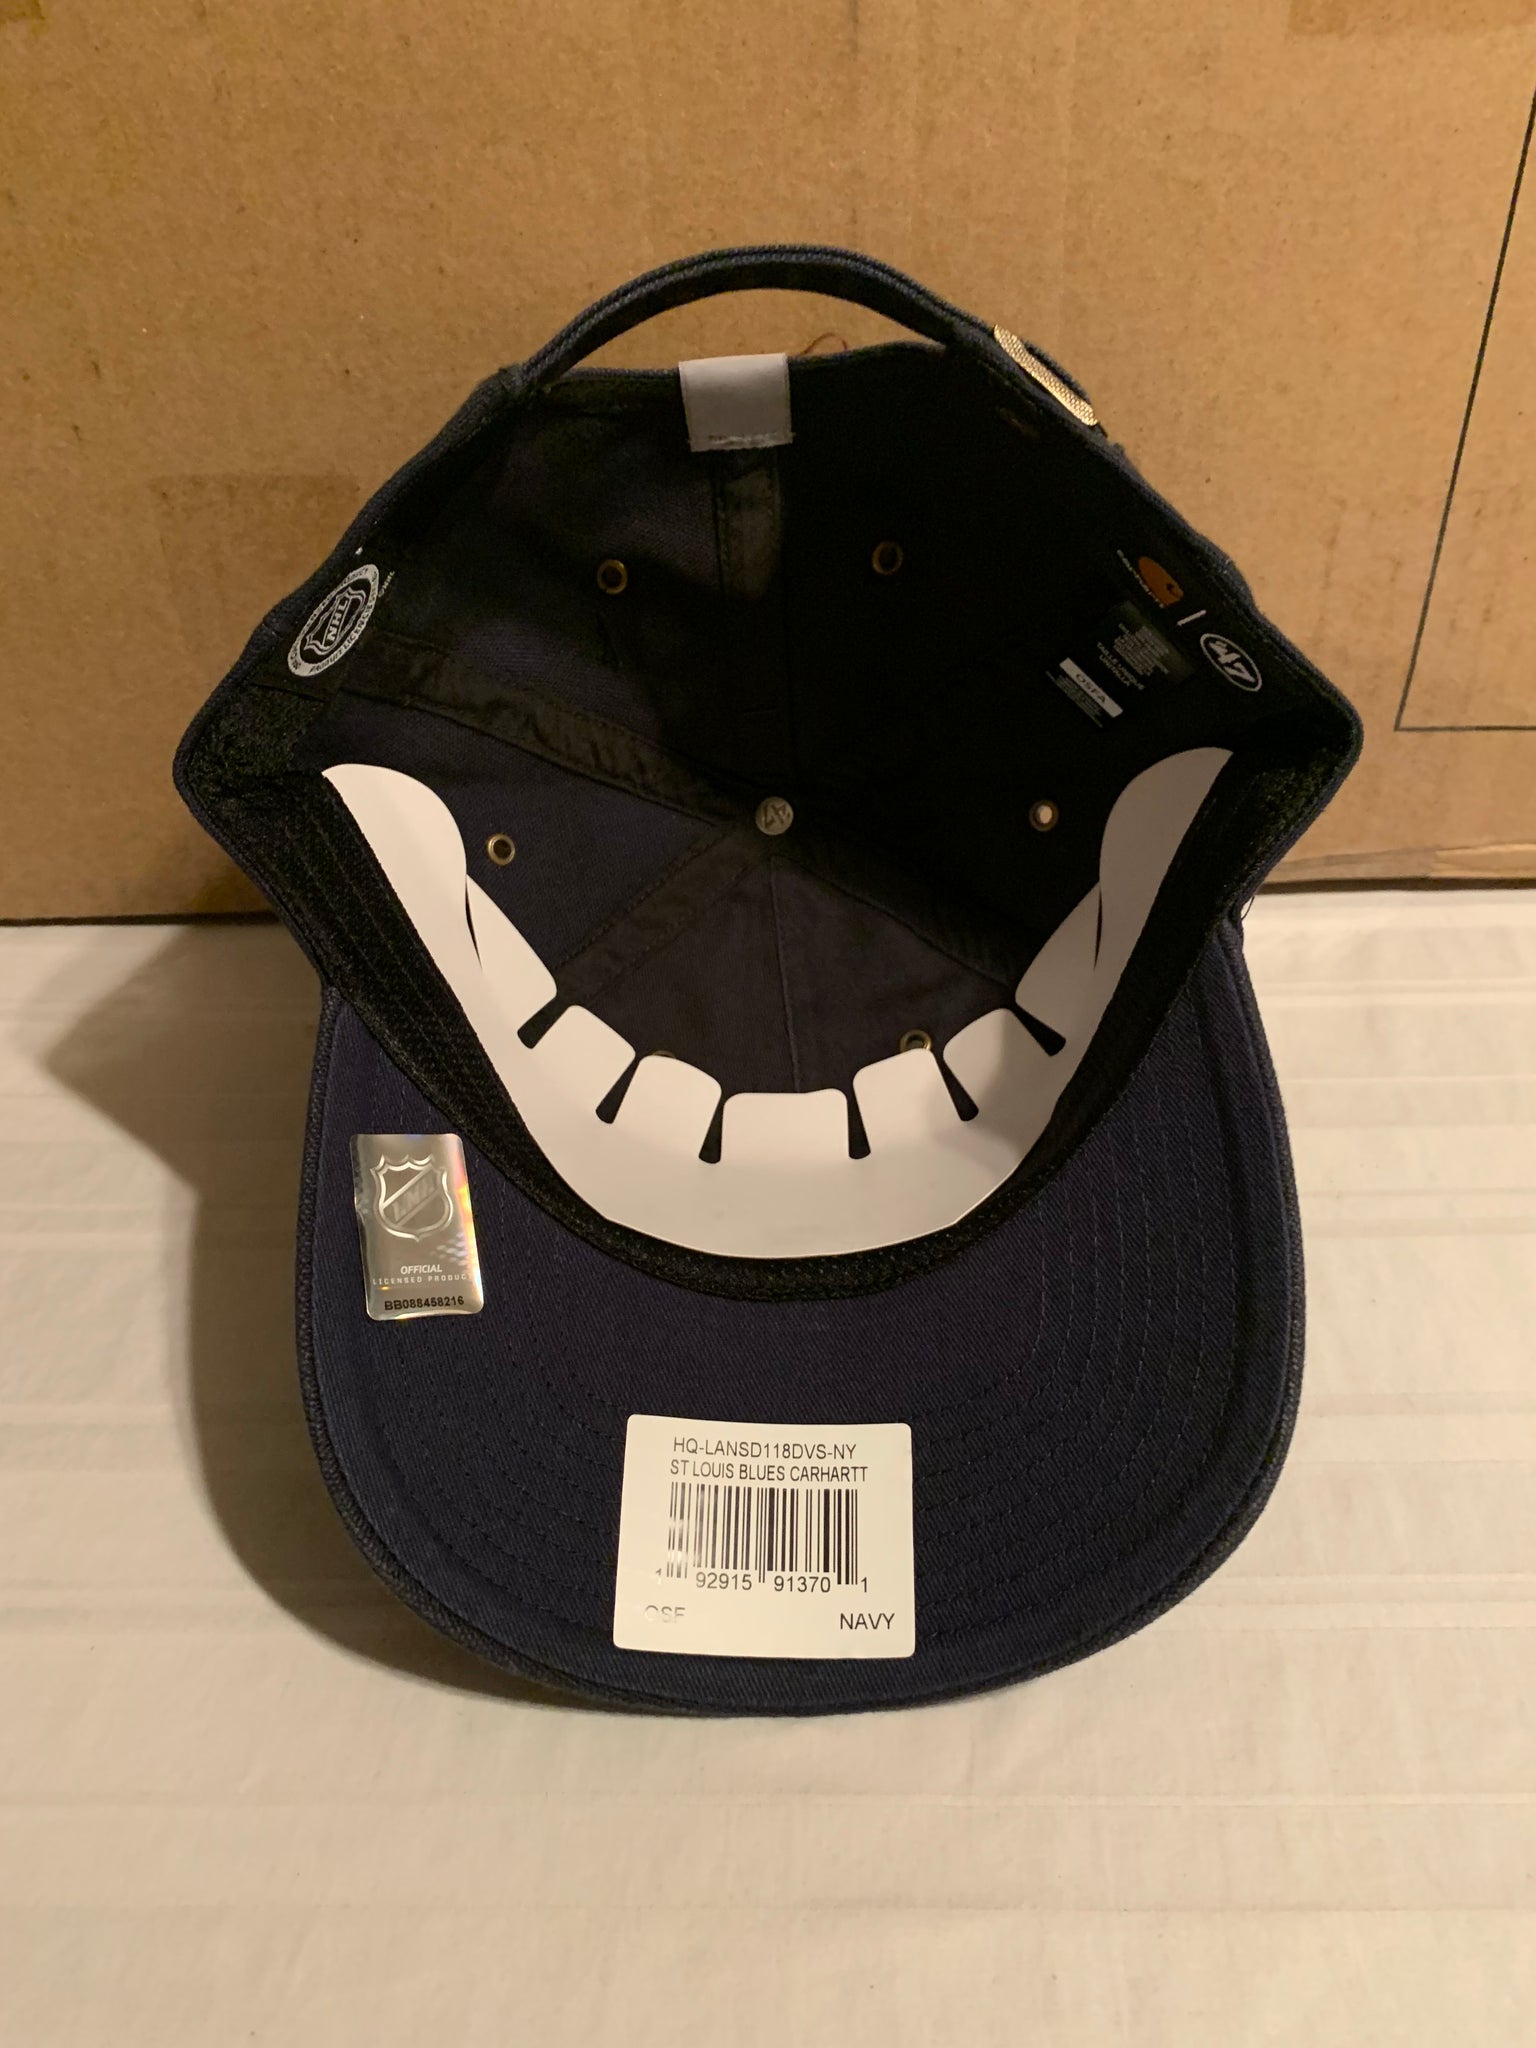 47 Brand Men's Navy St. Louis Blues Clean Up Adjustable Hat